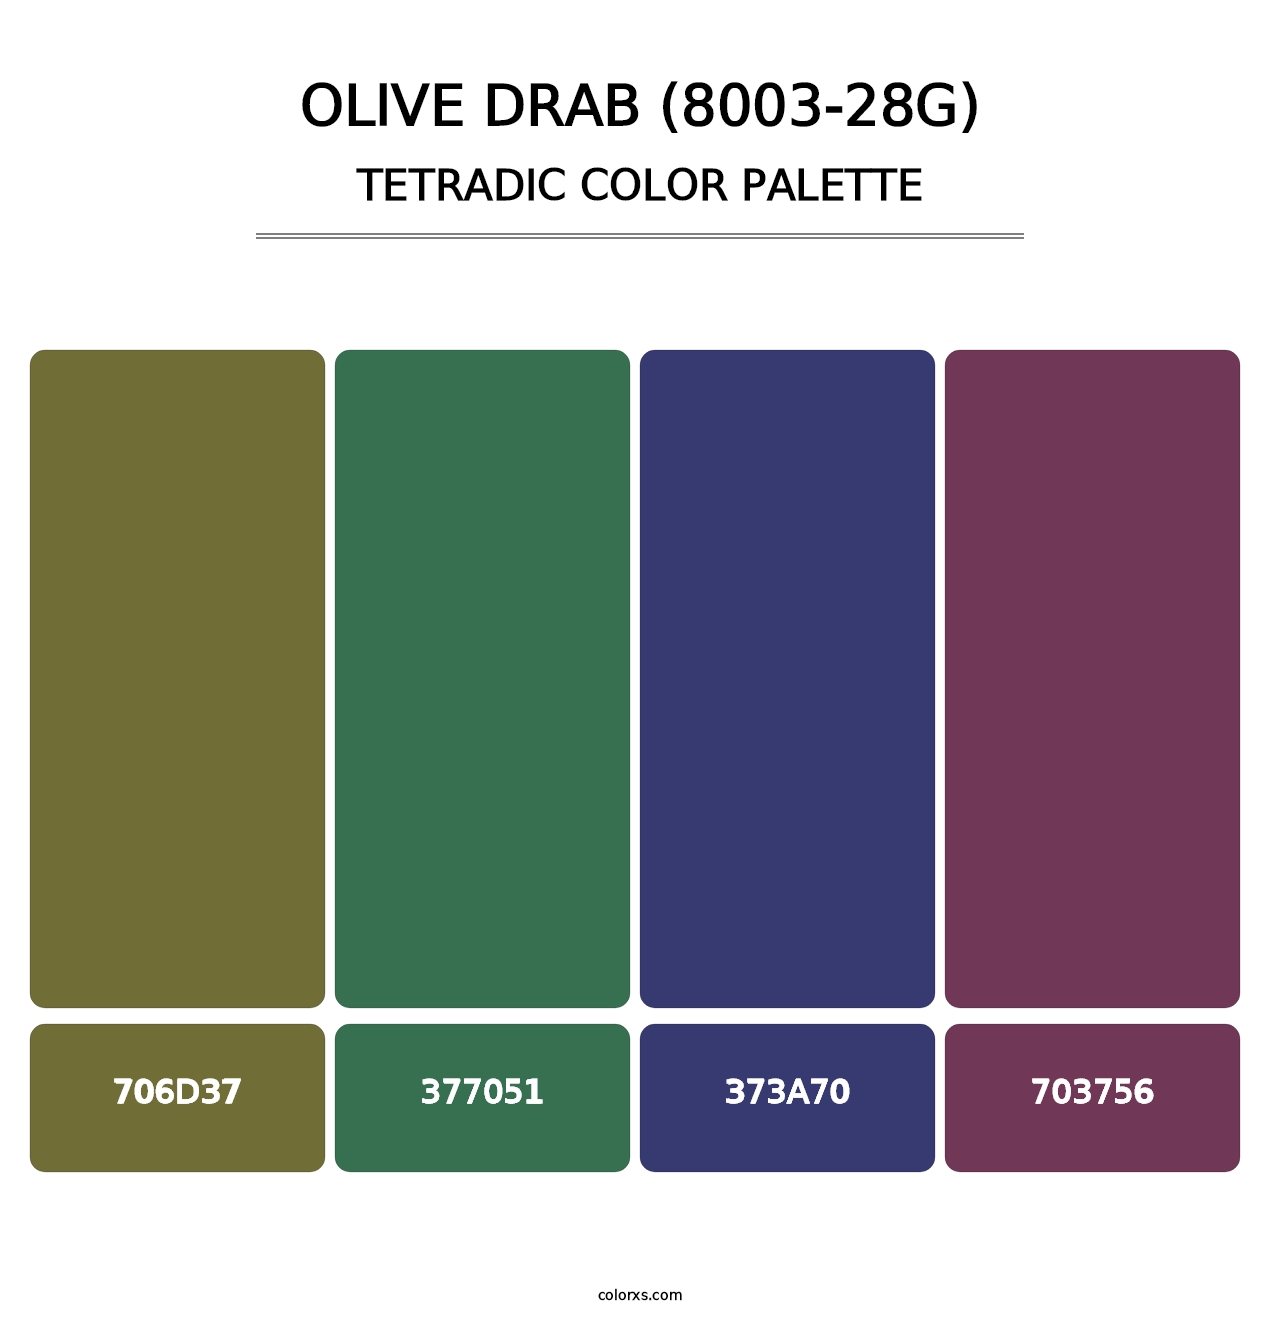 Olive Drab (8003-28G) - Tetradic Color Palette